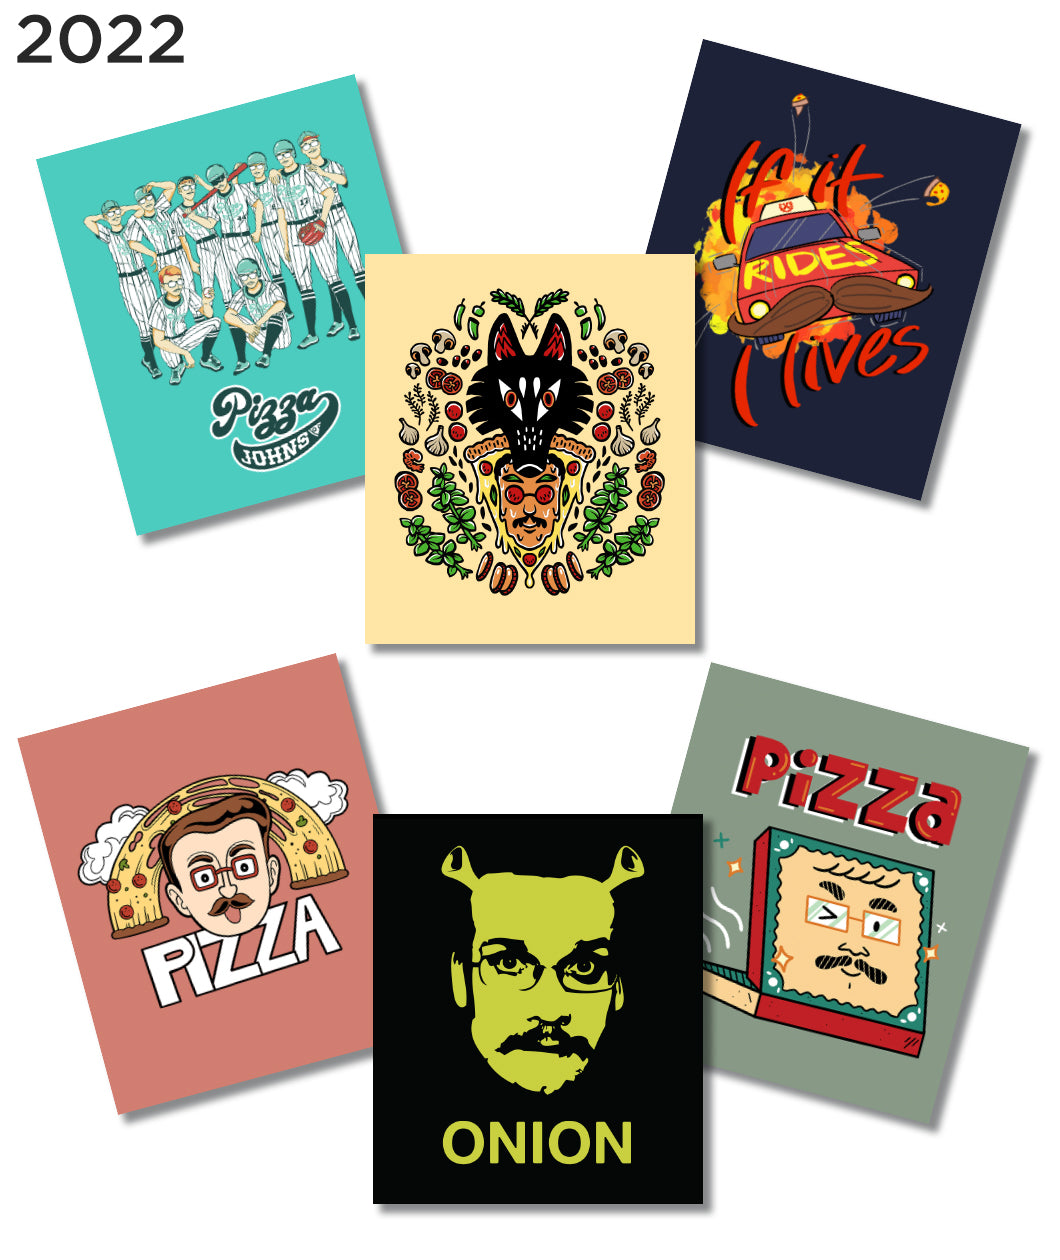 Pizza John Sticker Packs (All Years)